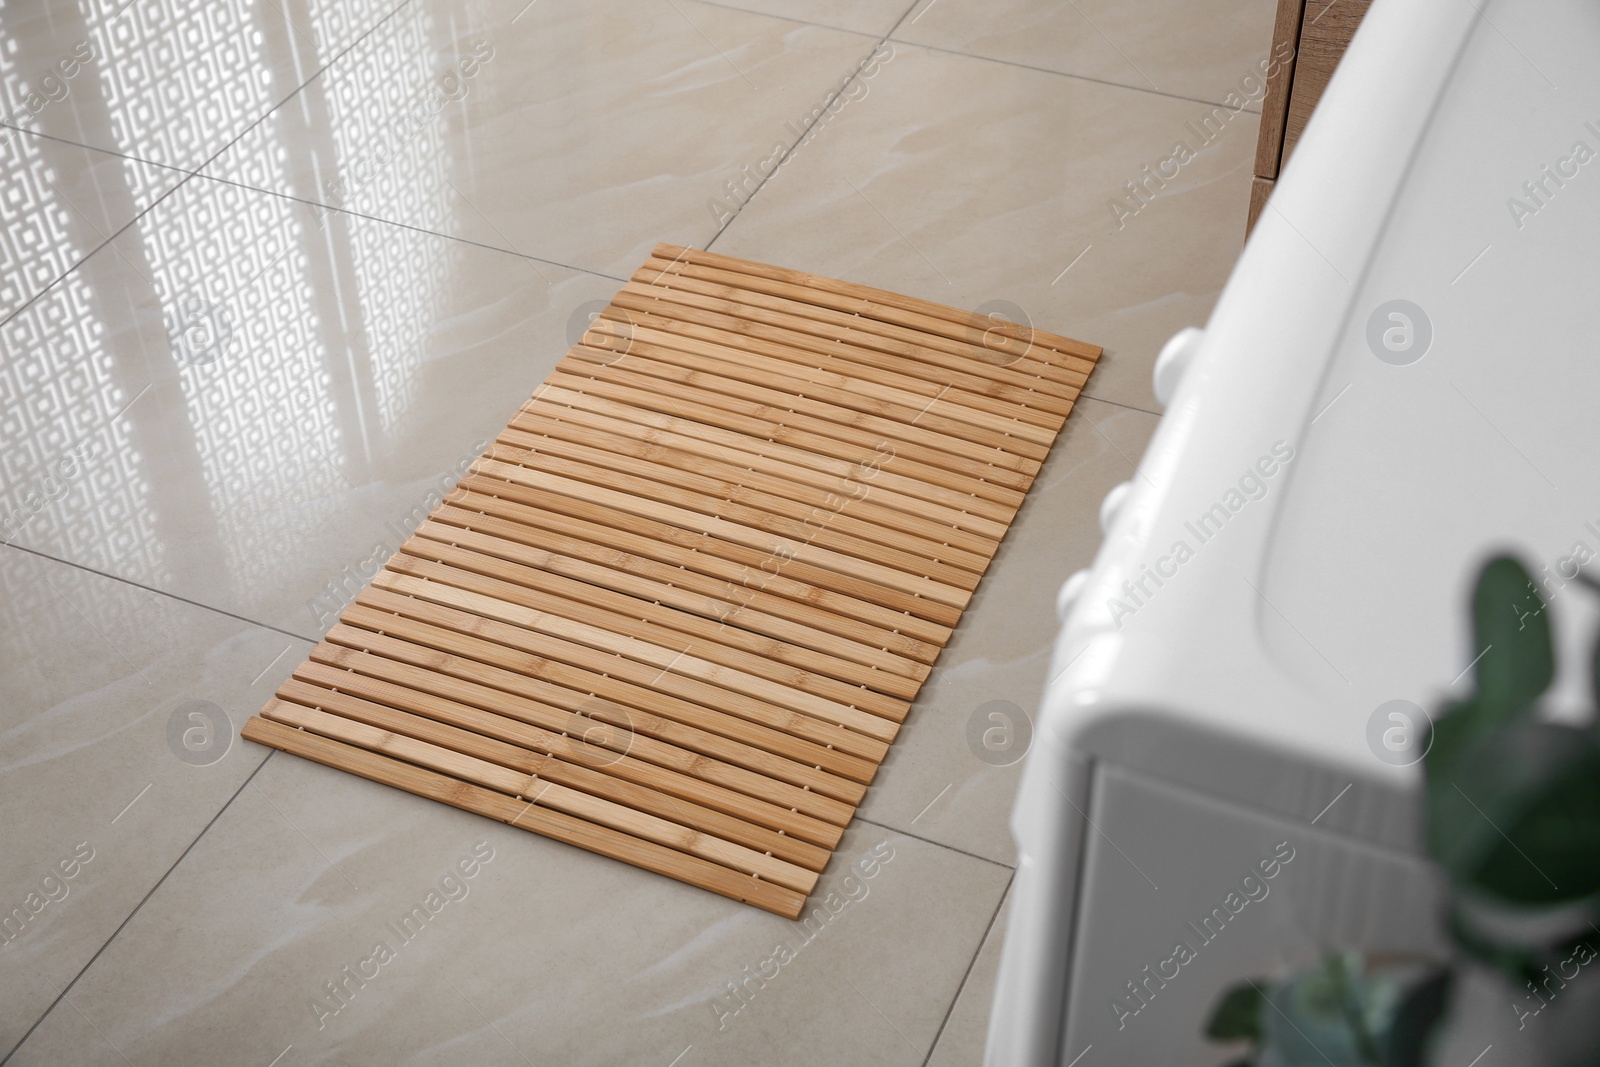 Photo of Wooden mat on floor near washing machine in bathroom